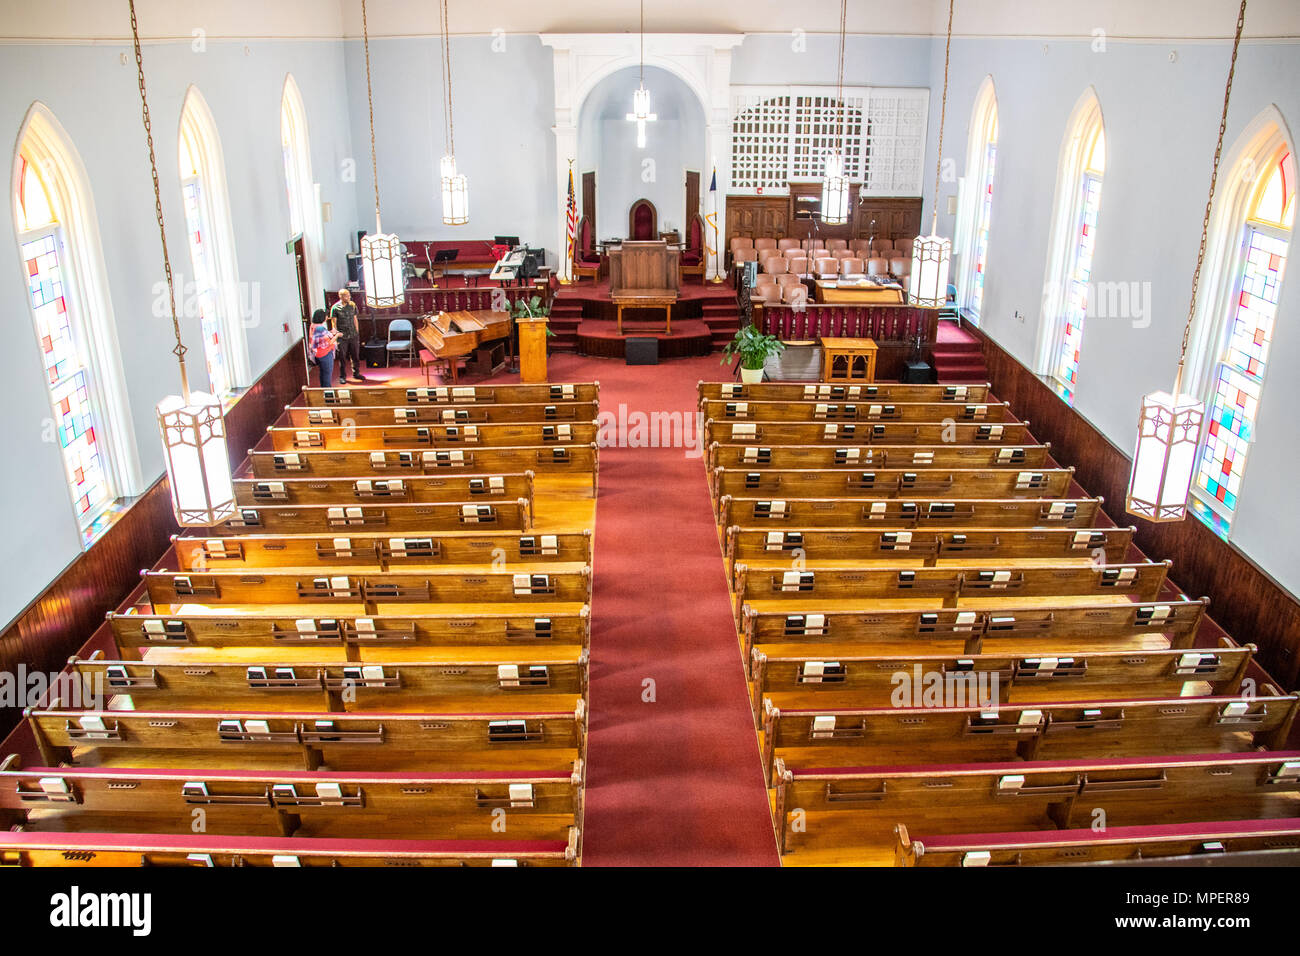 La avenida Dexter King Memorial Baptist Church, Montgomery, Alabama, EE.UU. Foto de stock